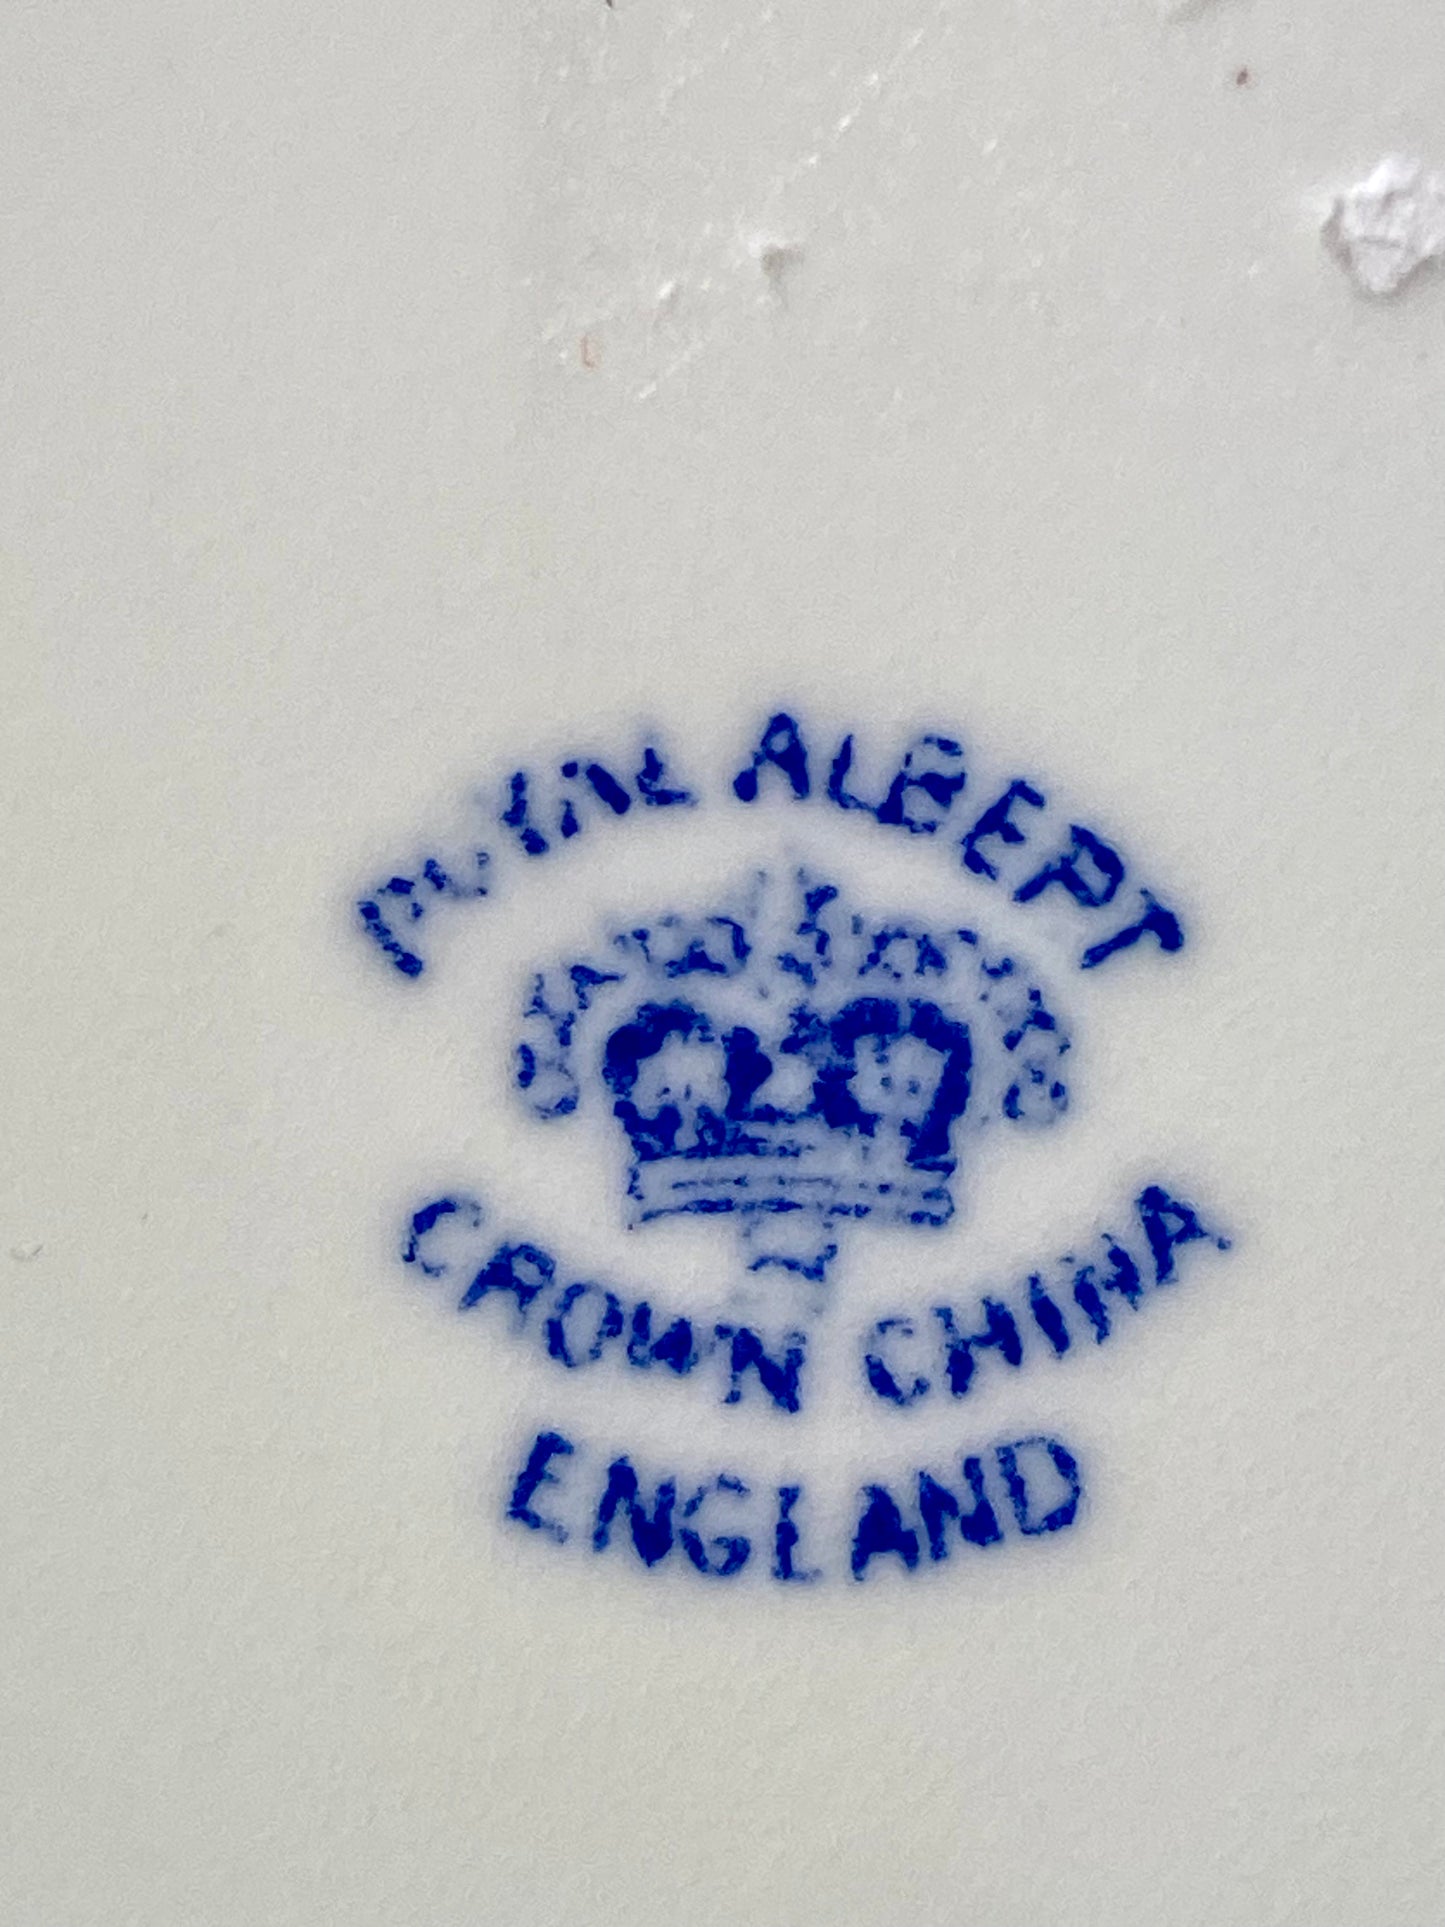 Vintage Royal Albert blue & white Blue willow porcelain plate